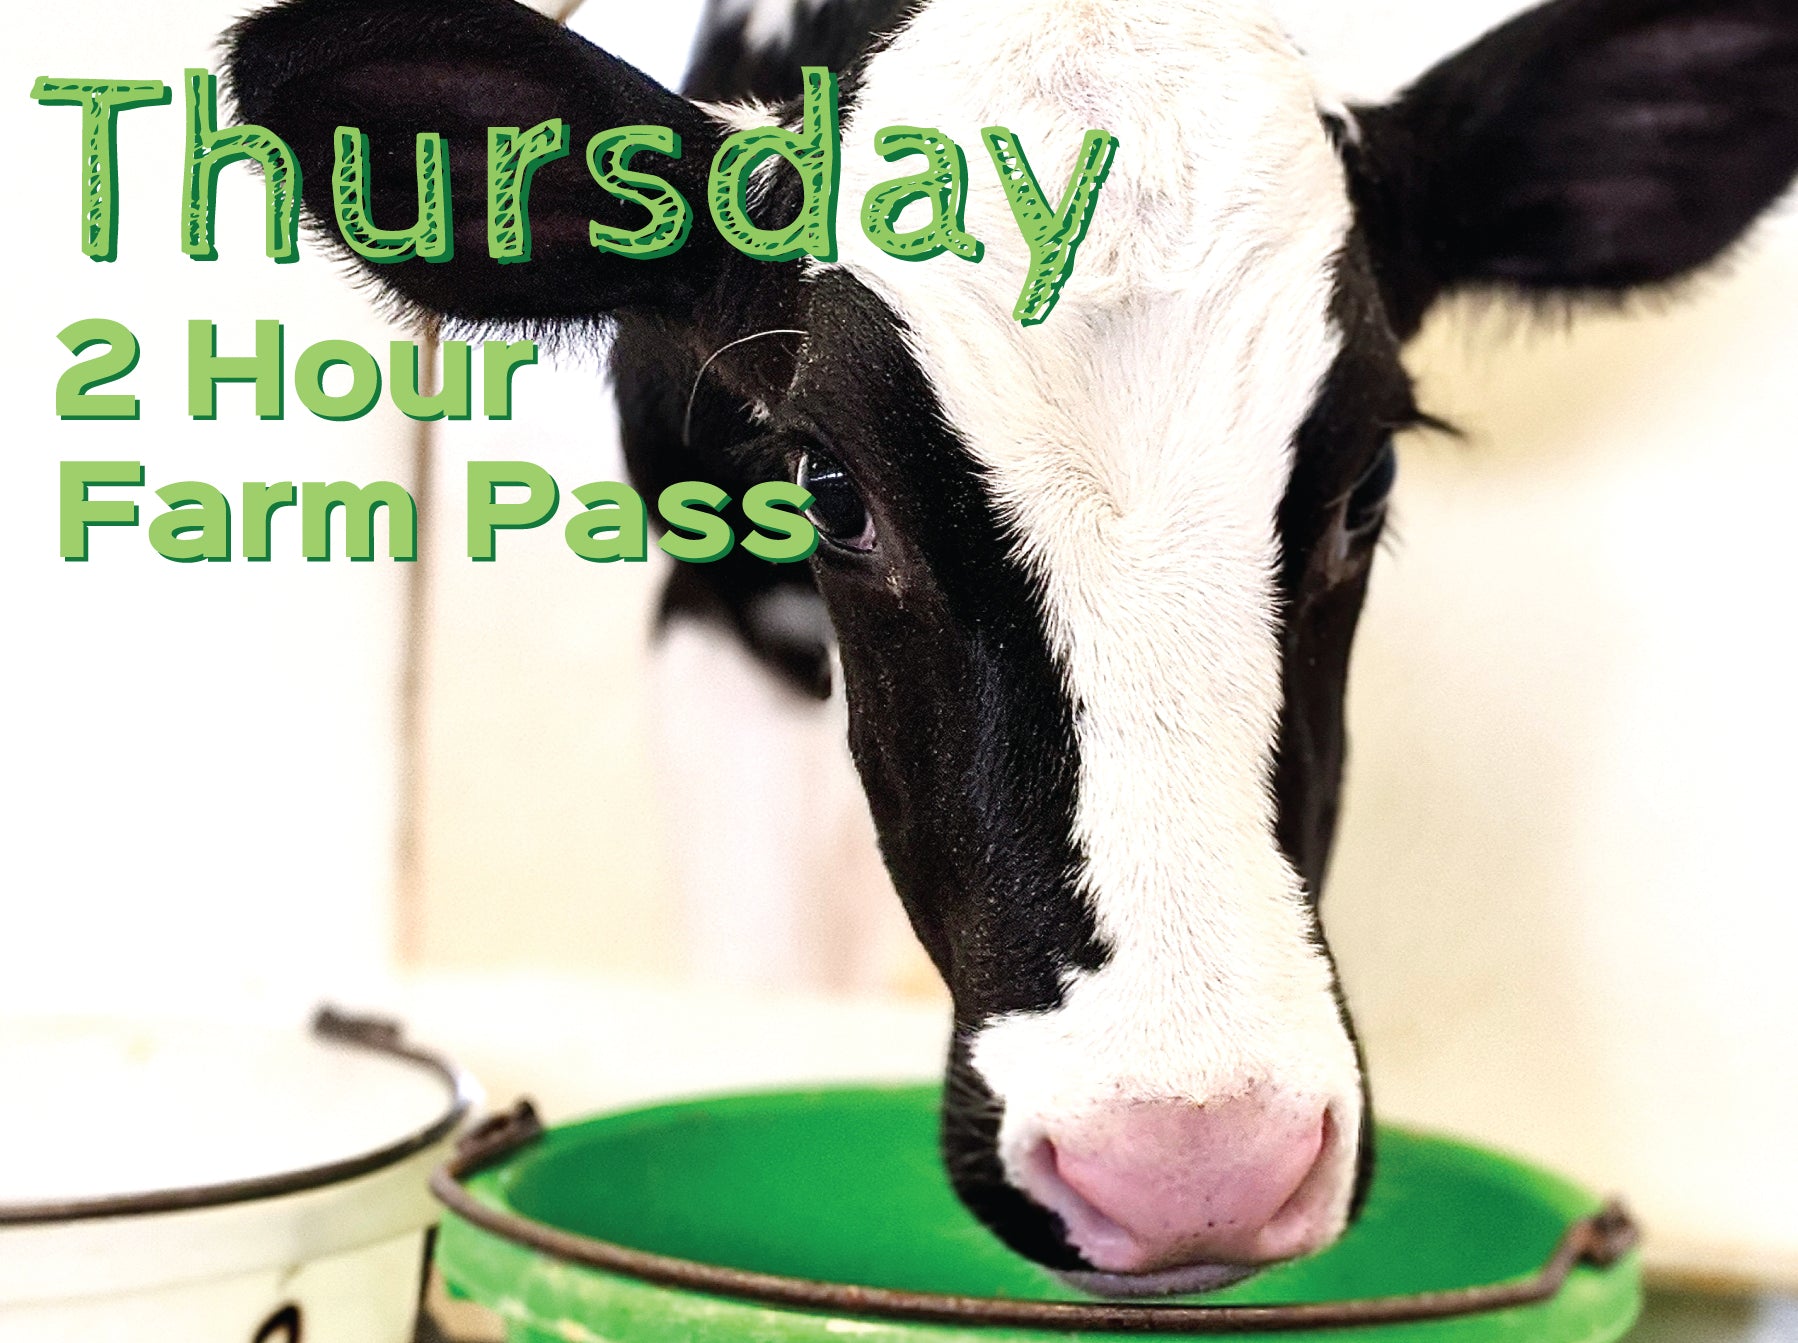 2 Hour Farm Pass Thursday March 7th